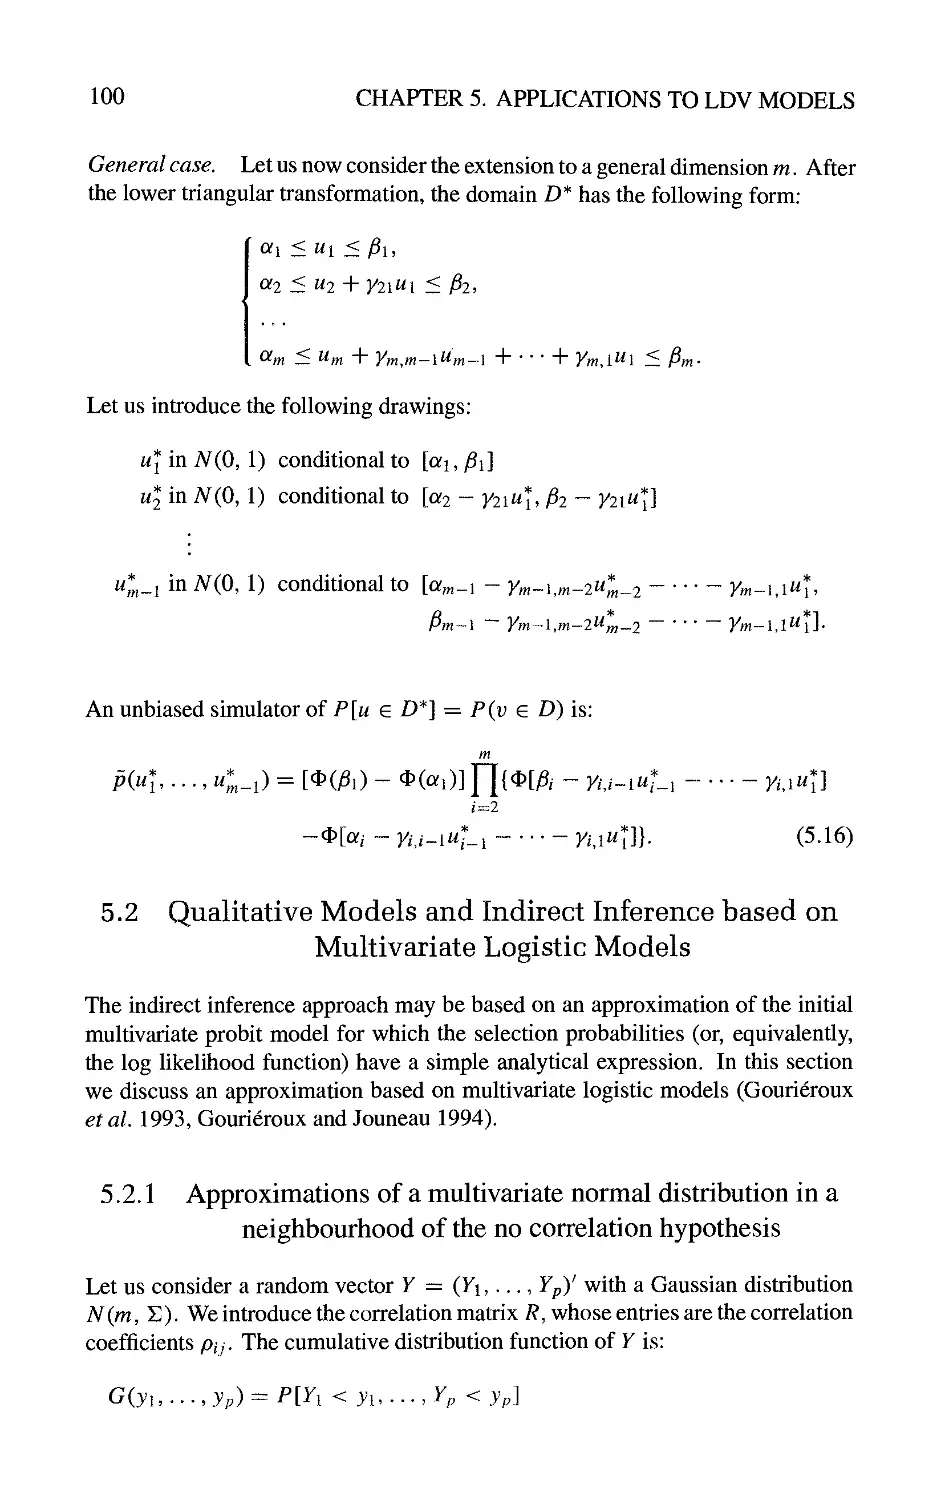 5.2 Qualitative Models and Indirect Inference based on Multivariate Logistic Models